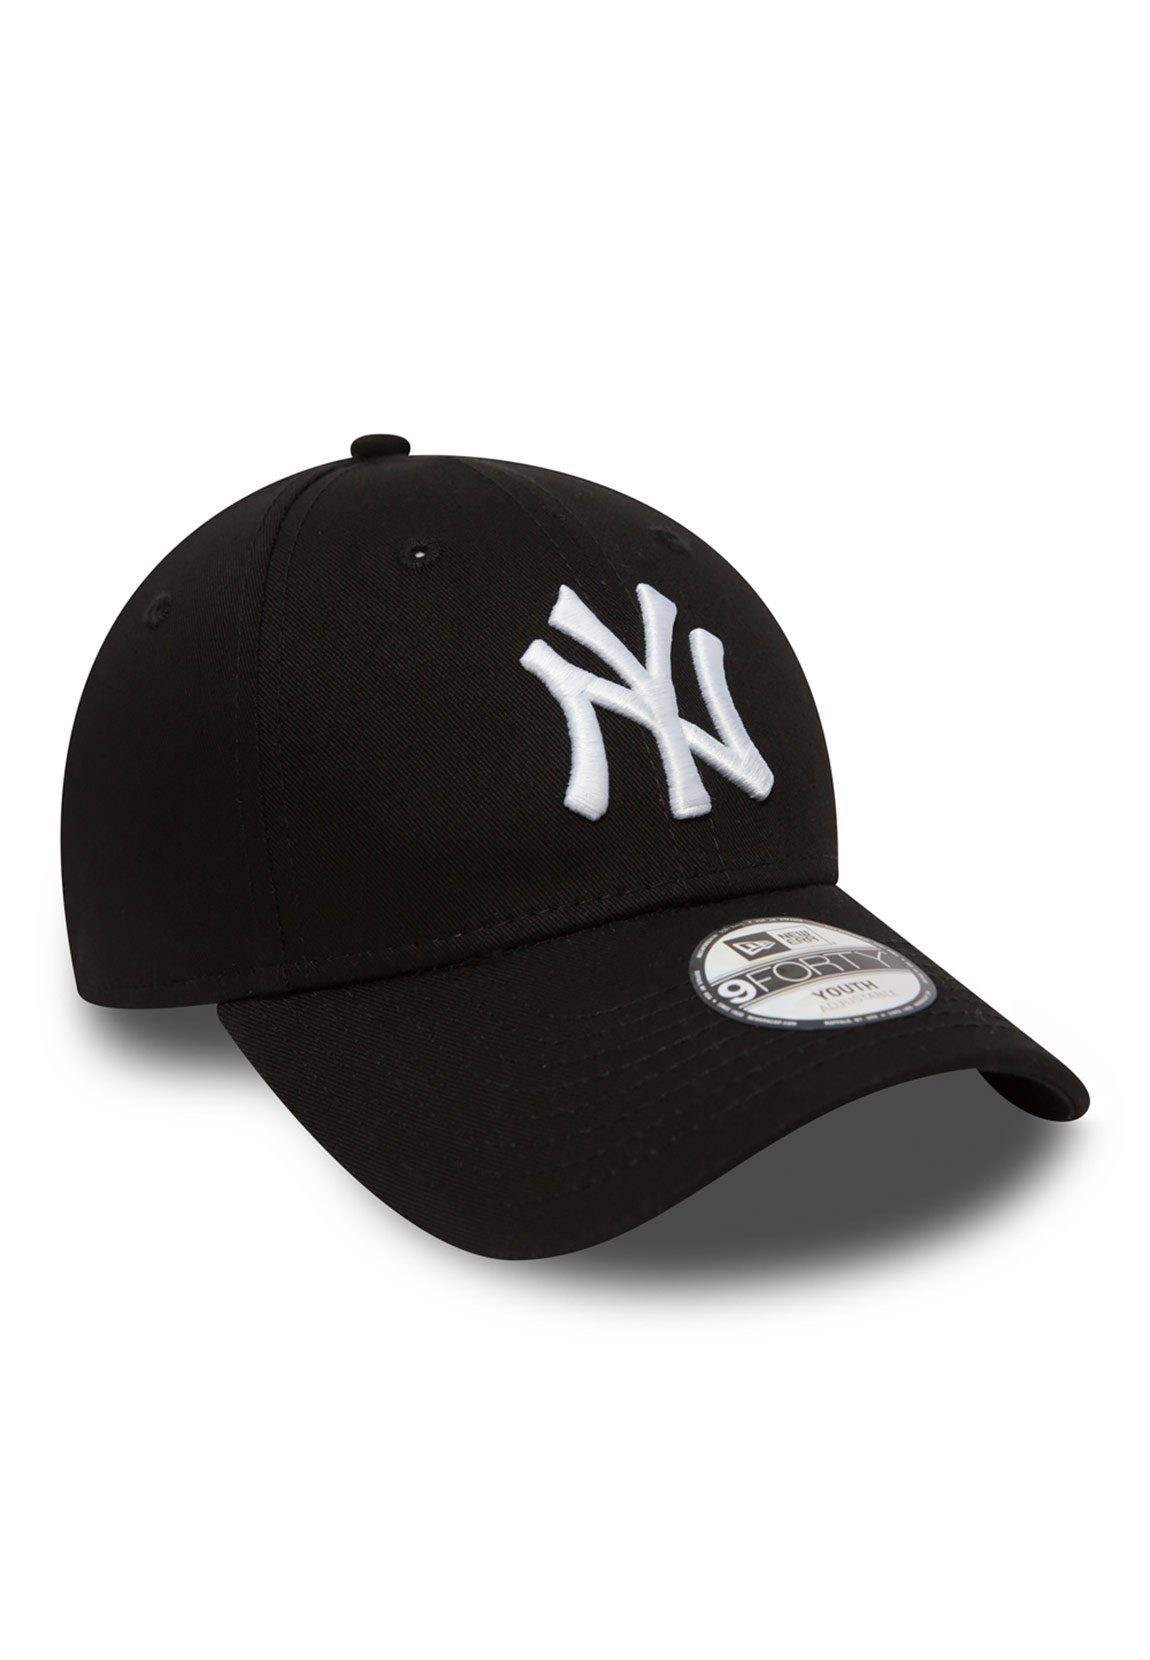 Adjustables Era YANKEES New Black-White Cap Baseball schwarz-weiß - Era Cap Kids NY - New